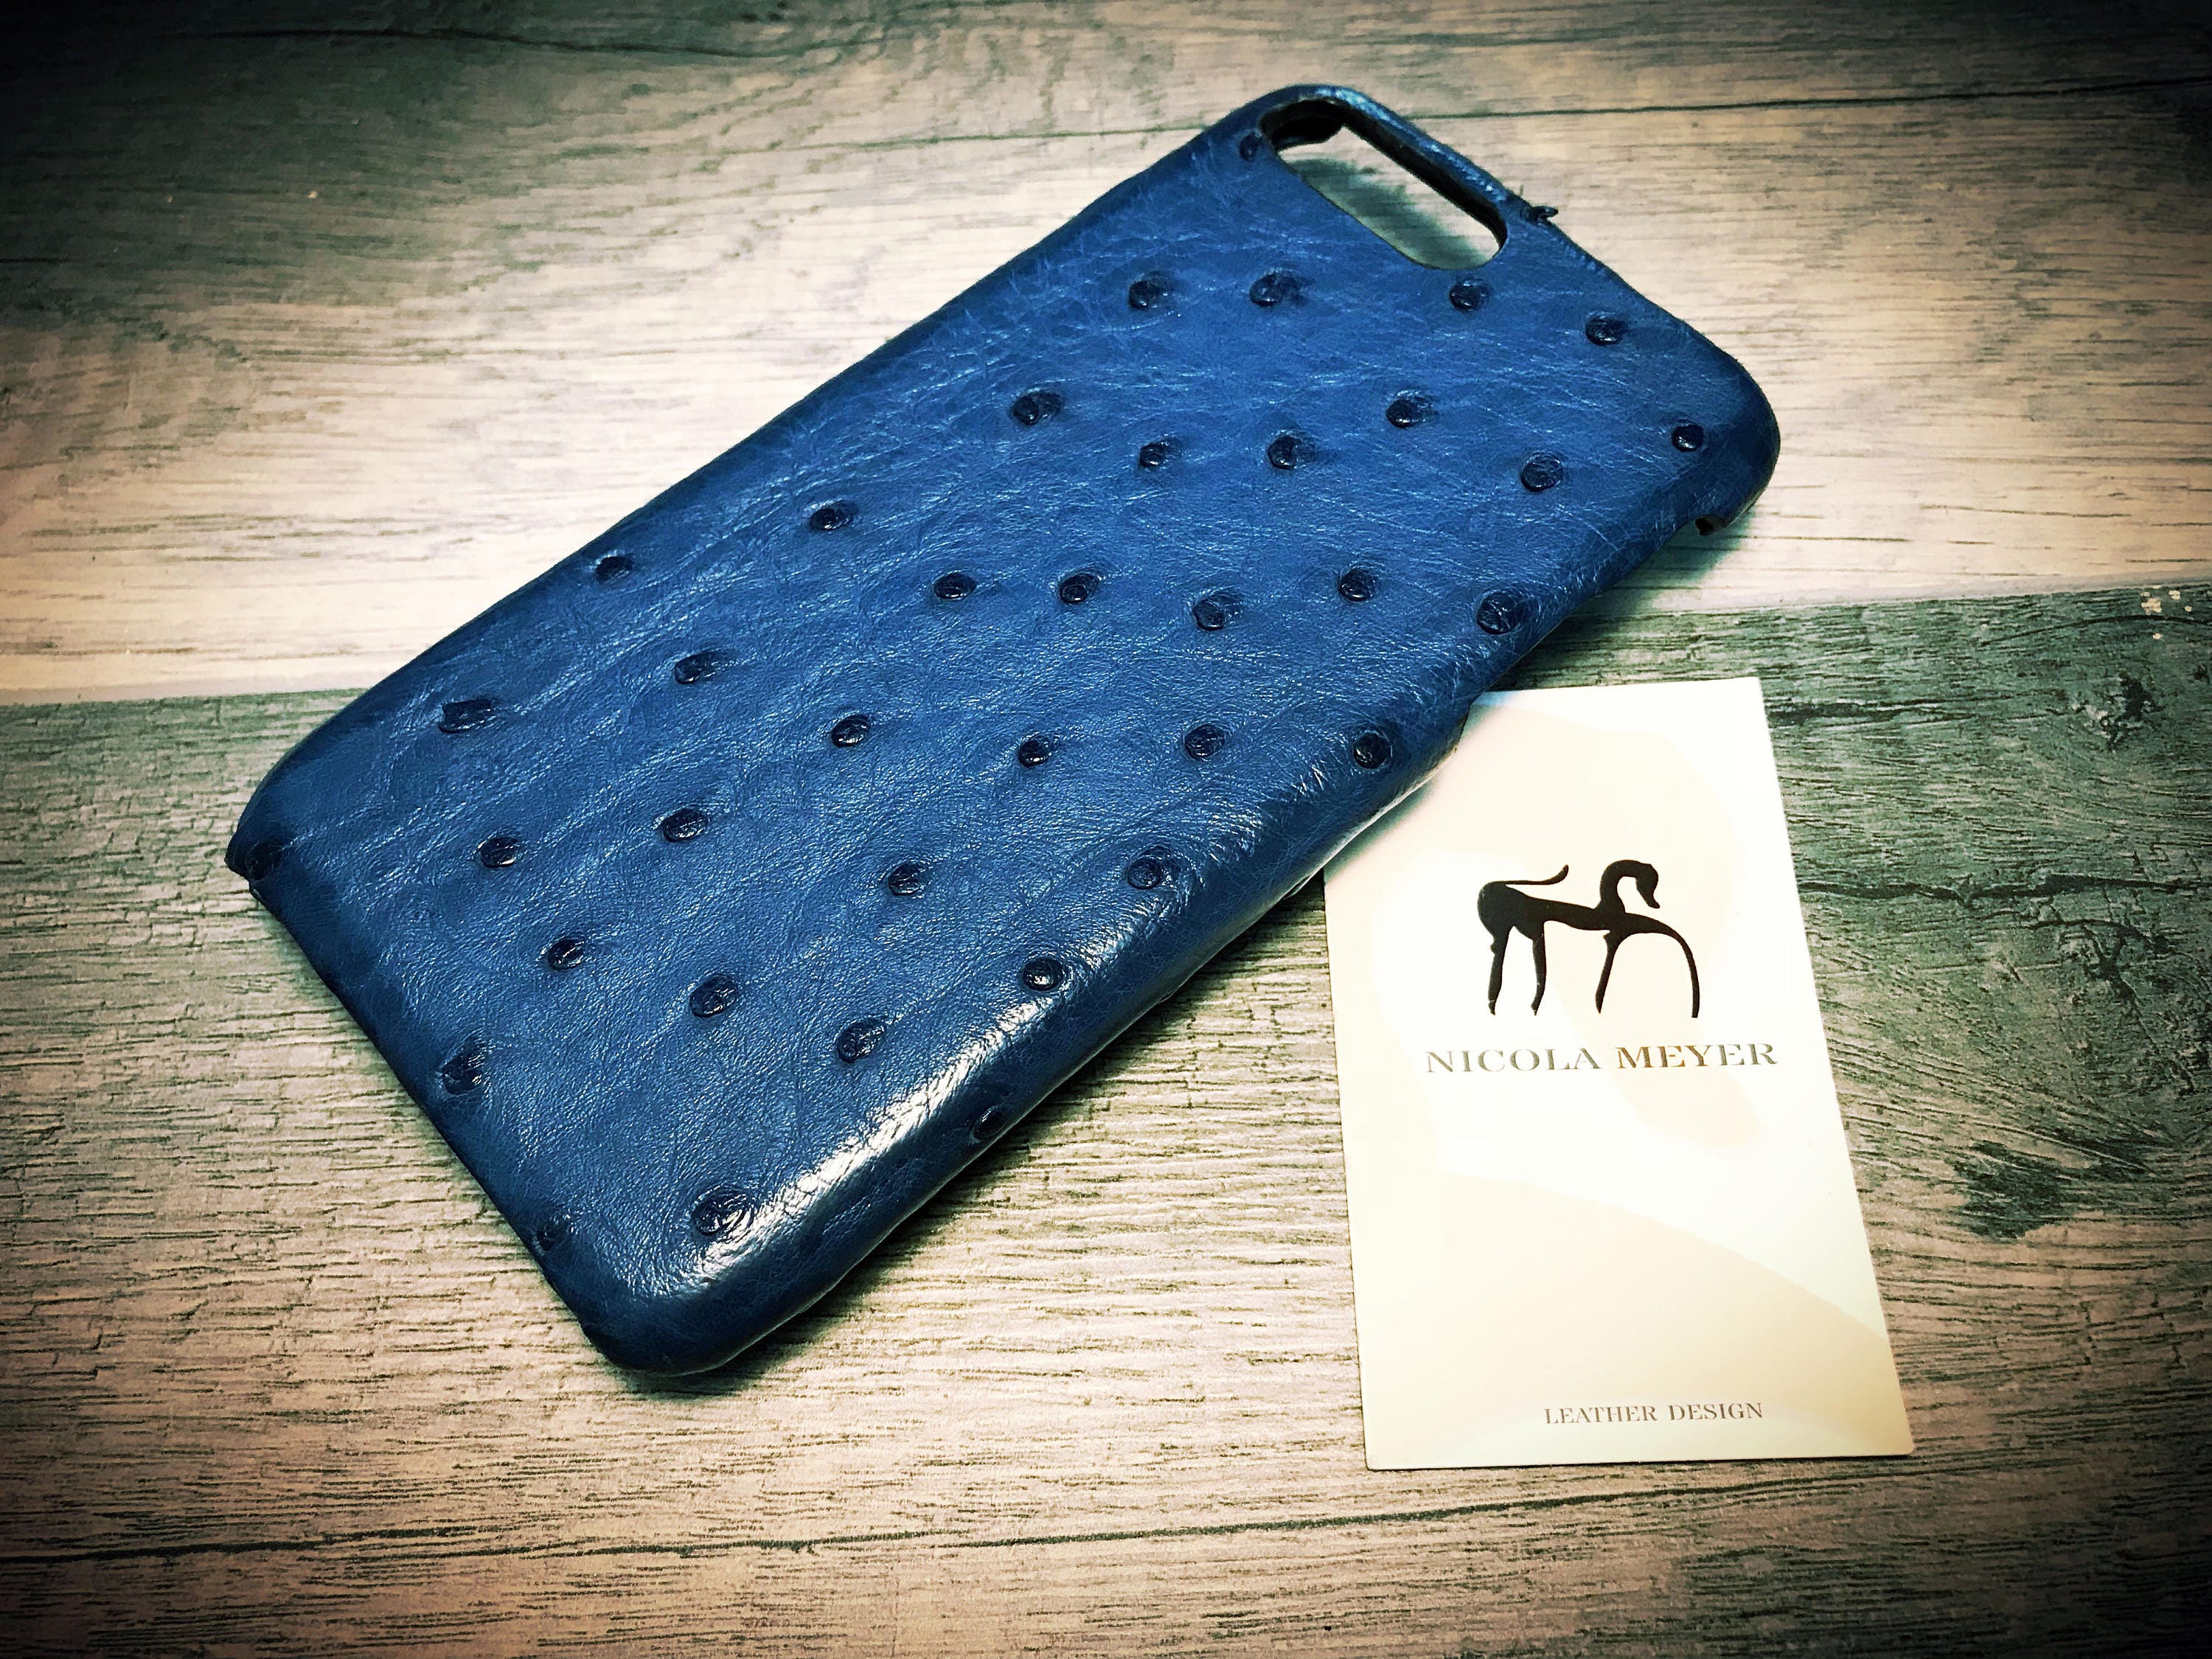 Louis Vuitton Damier Graphite Playphone Iphone 8 Cover